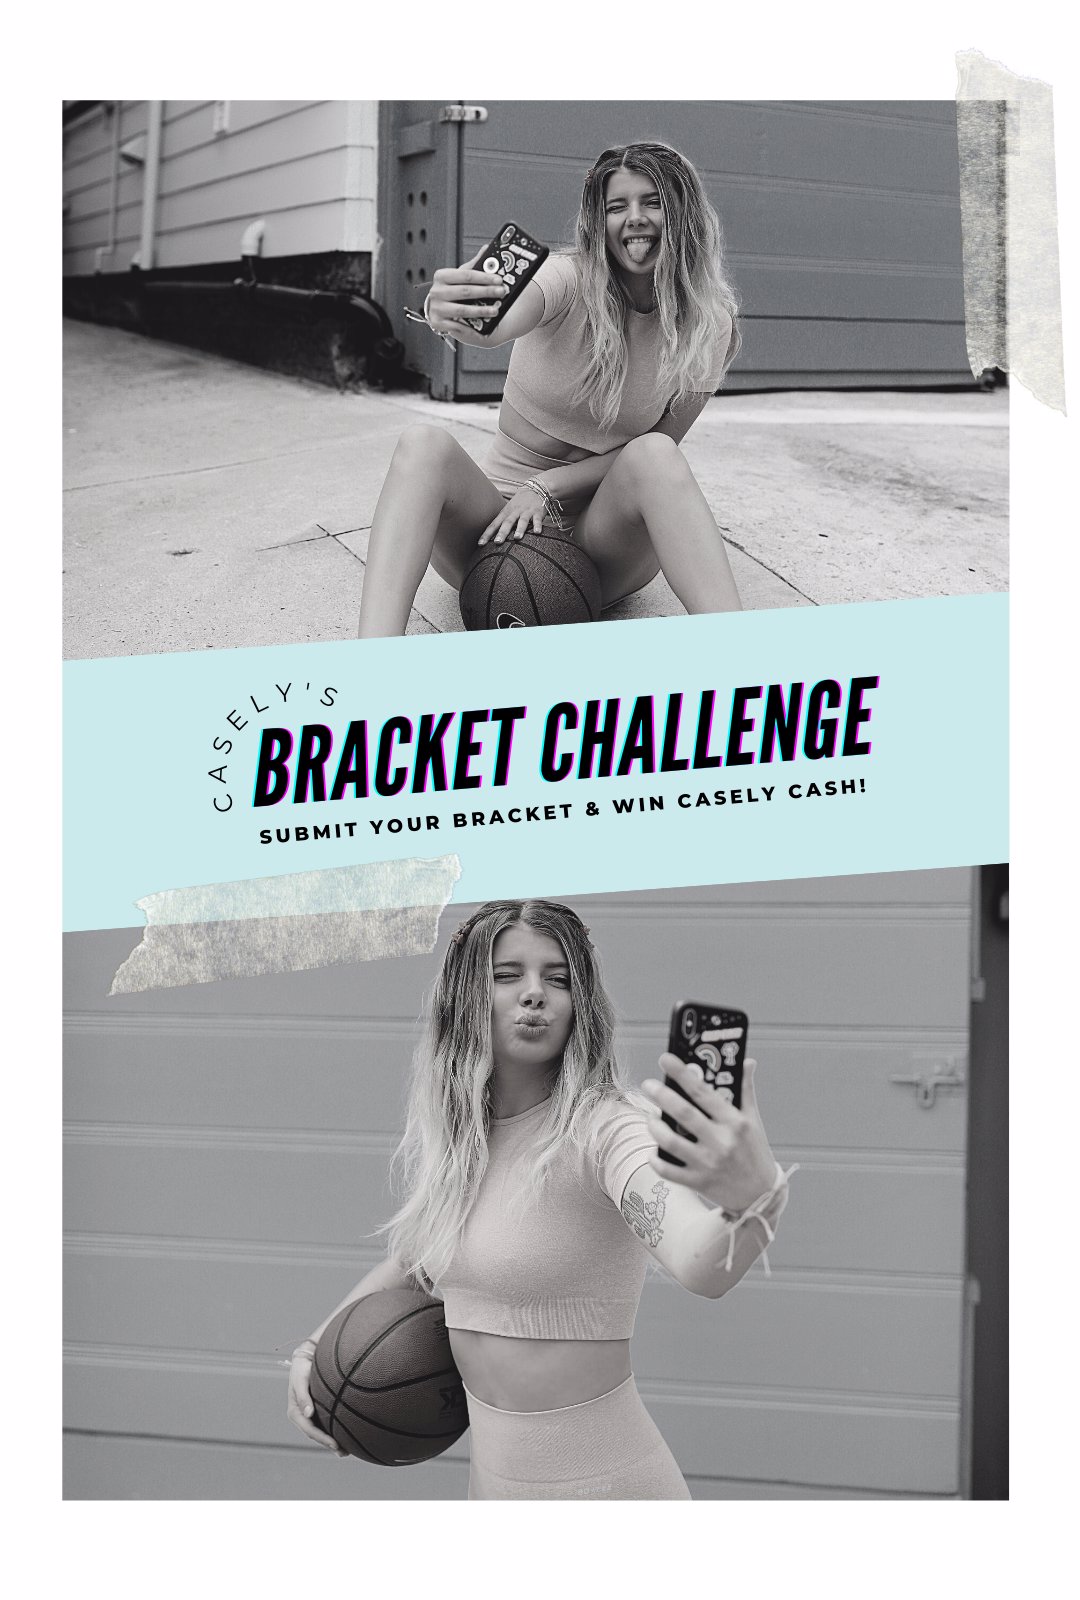 Bracket Challenge